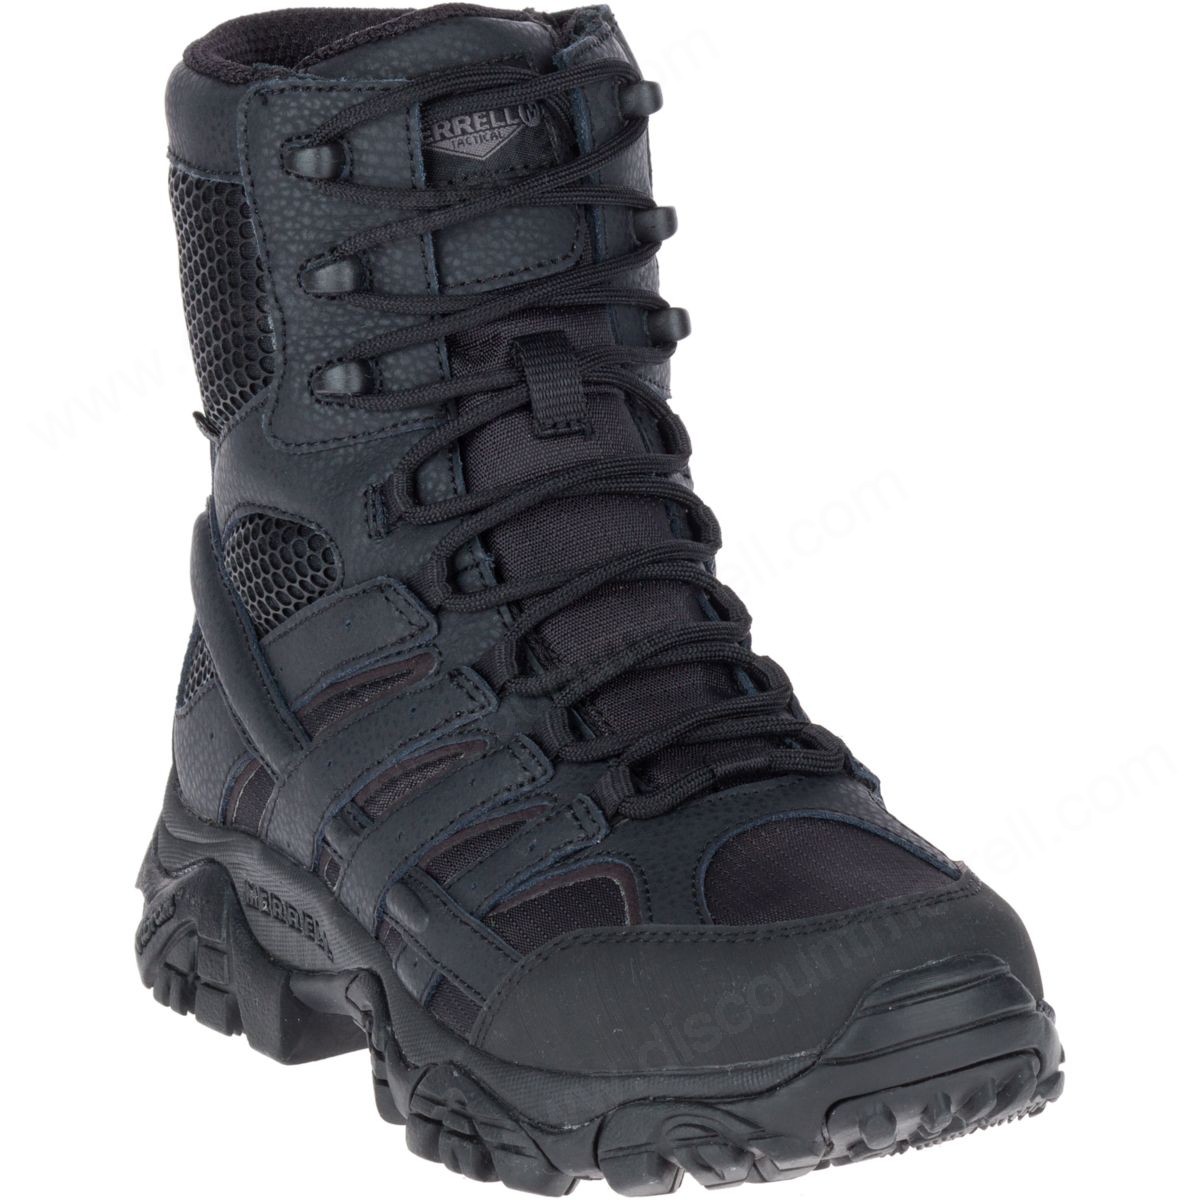 Merrell Man's Moab " Tactical Waterproof Boot Wide Black - -3